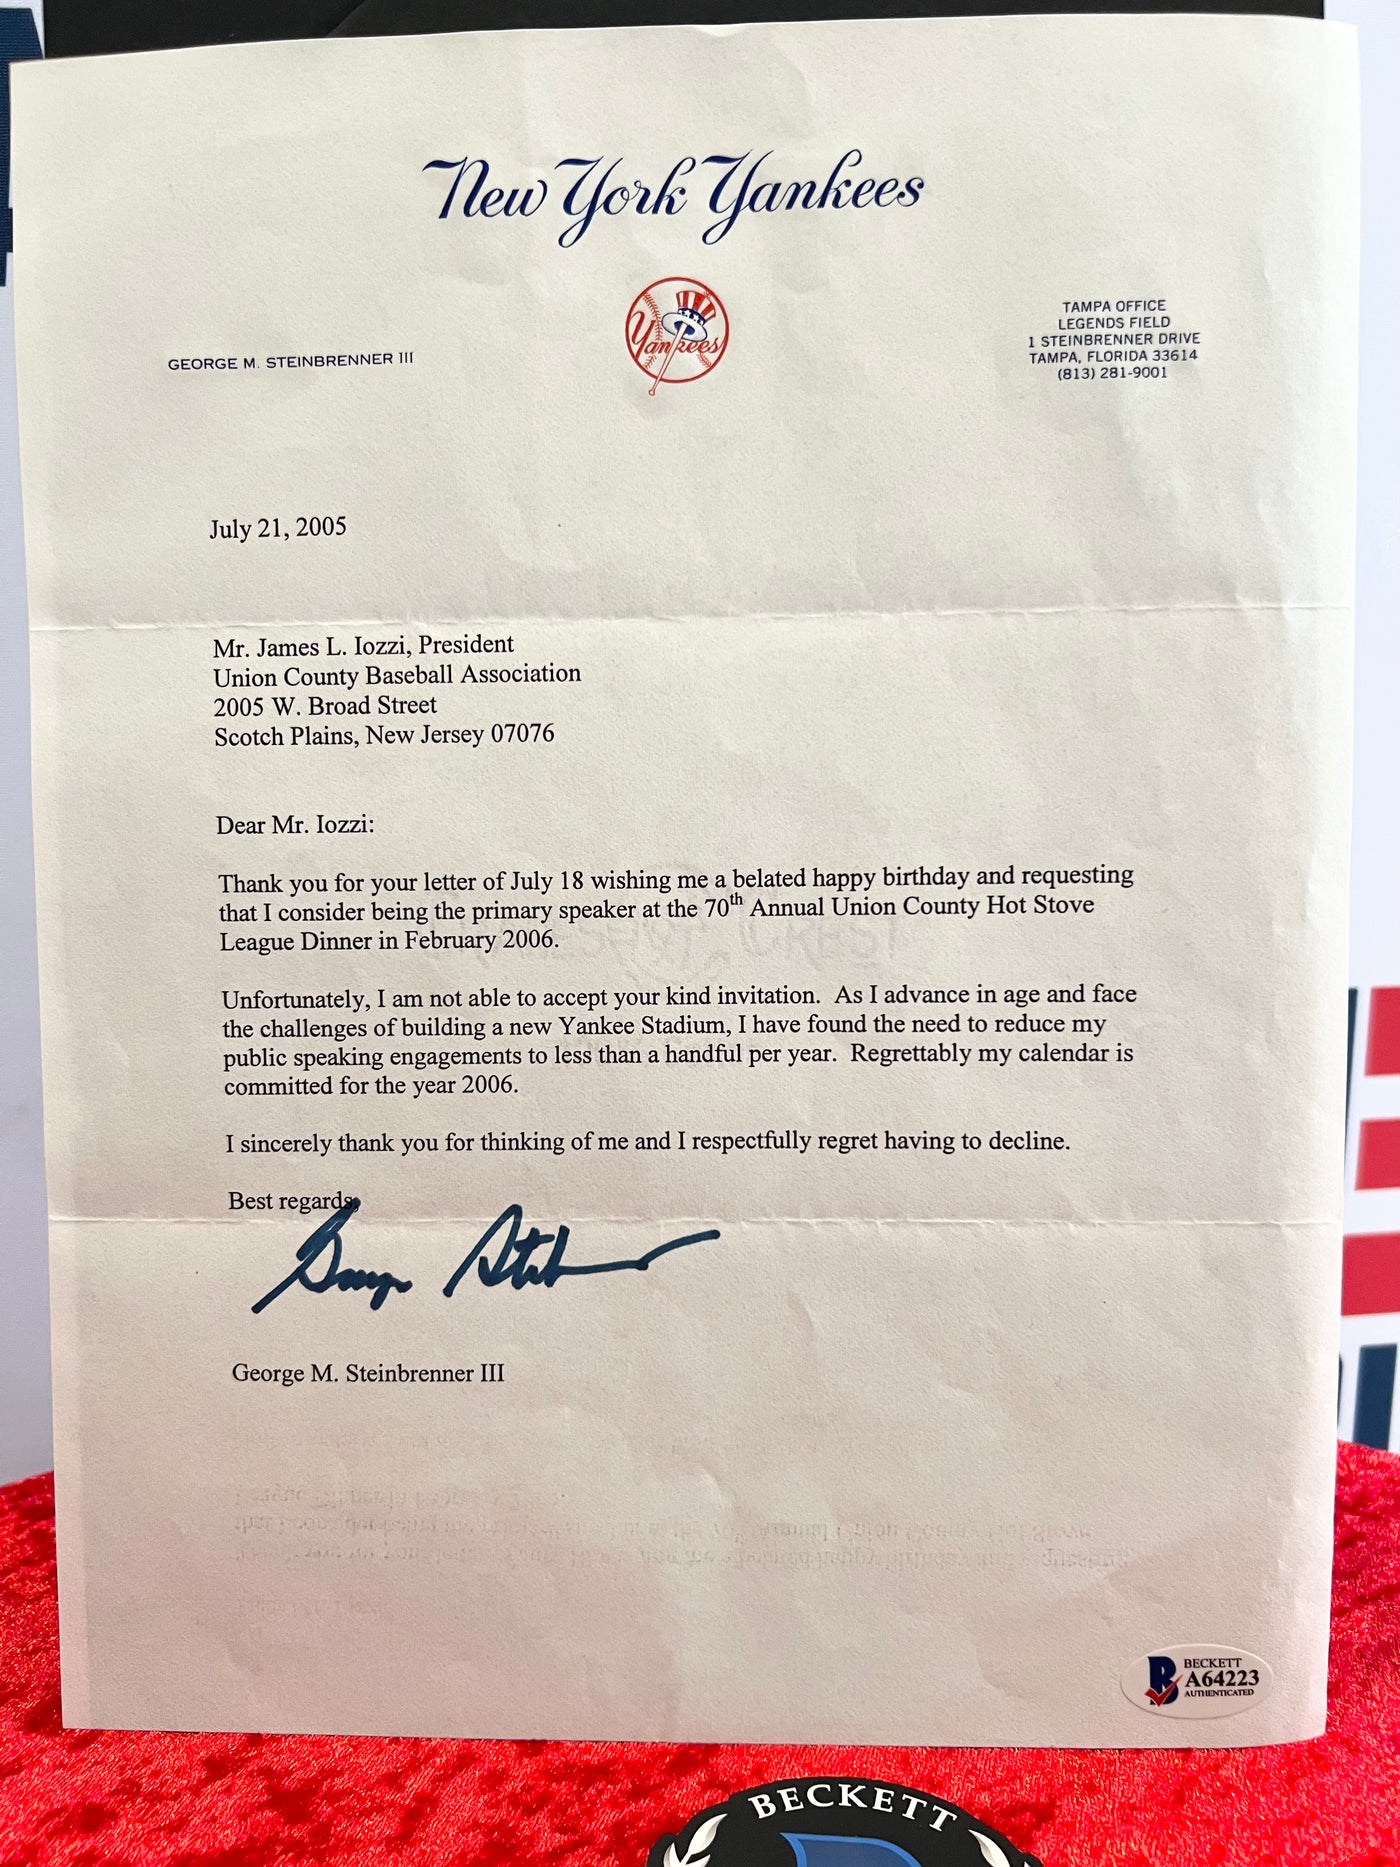 George Steinbrenner Signed 2005 Yankees Letter Beckett authentication New York Yankees letterhead